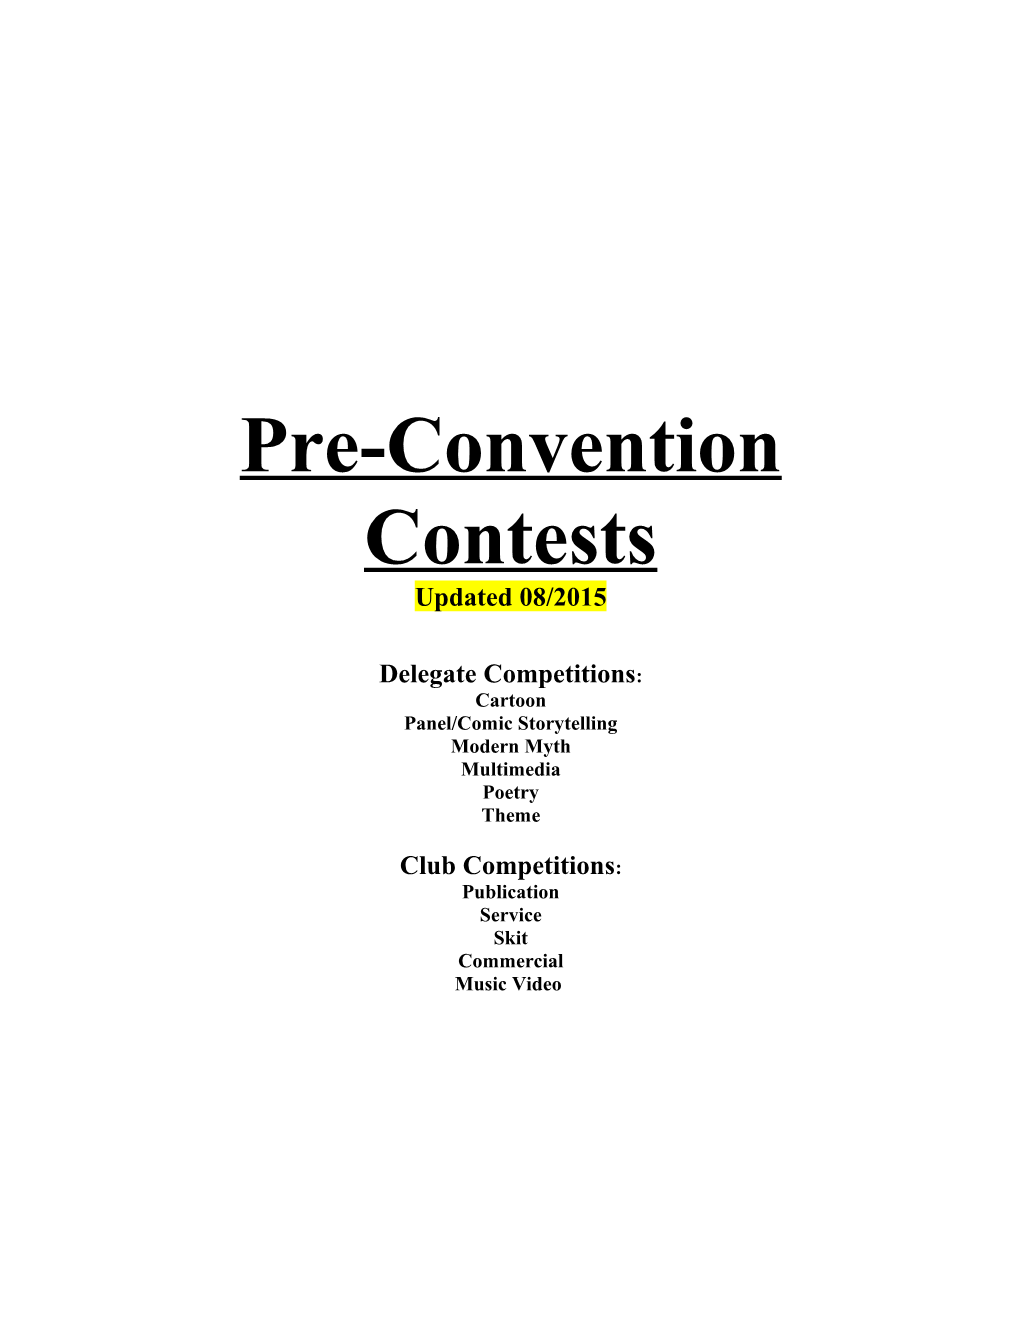 Pre-Convention Contests